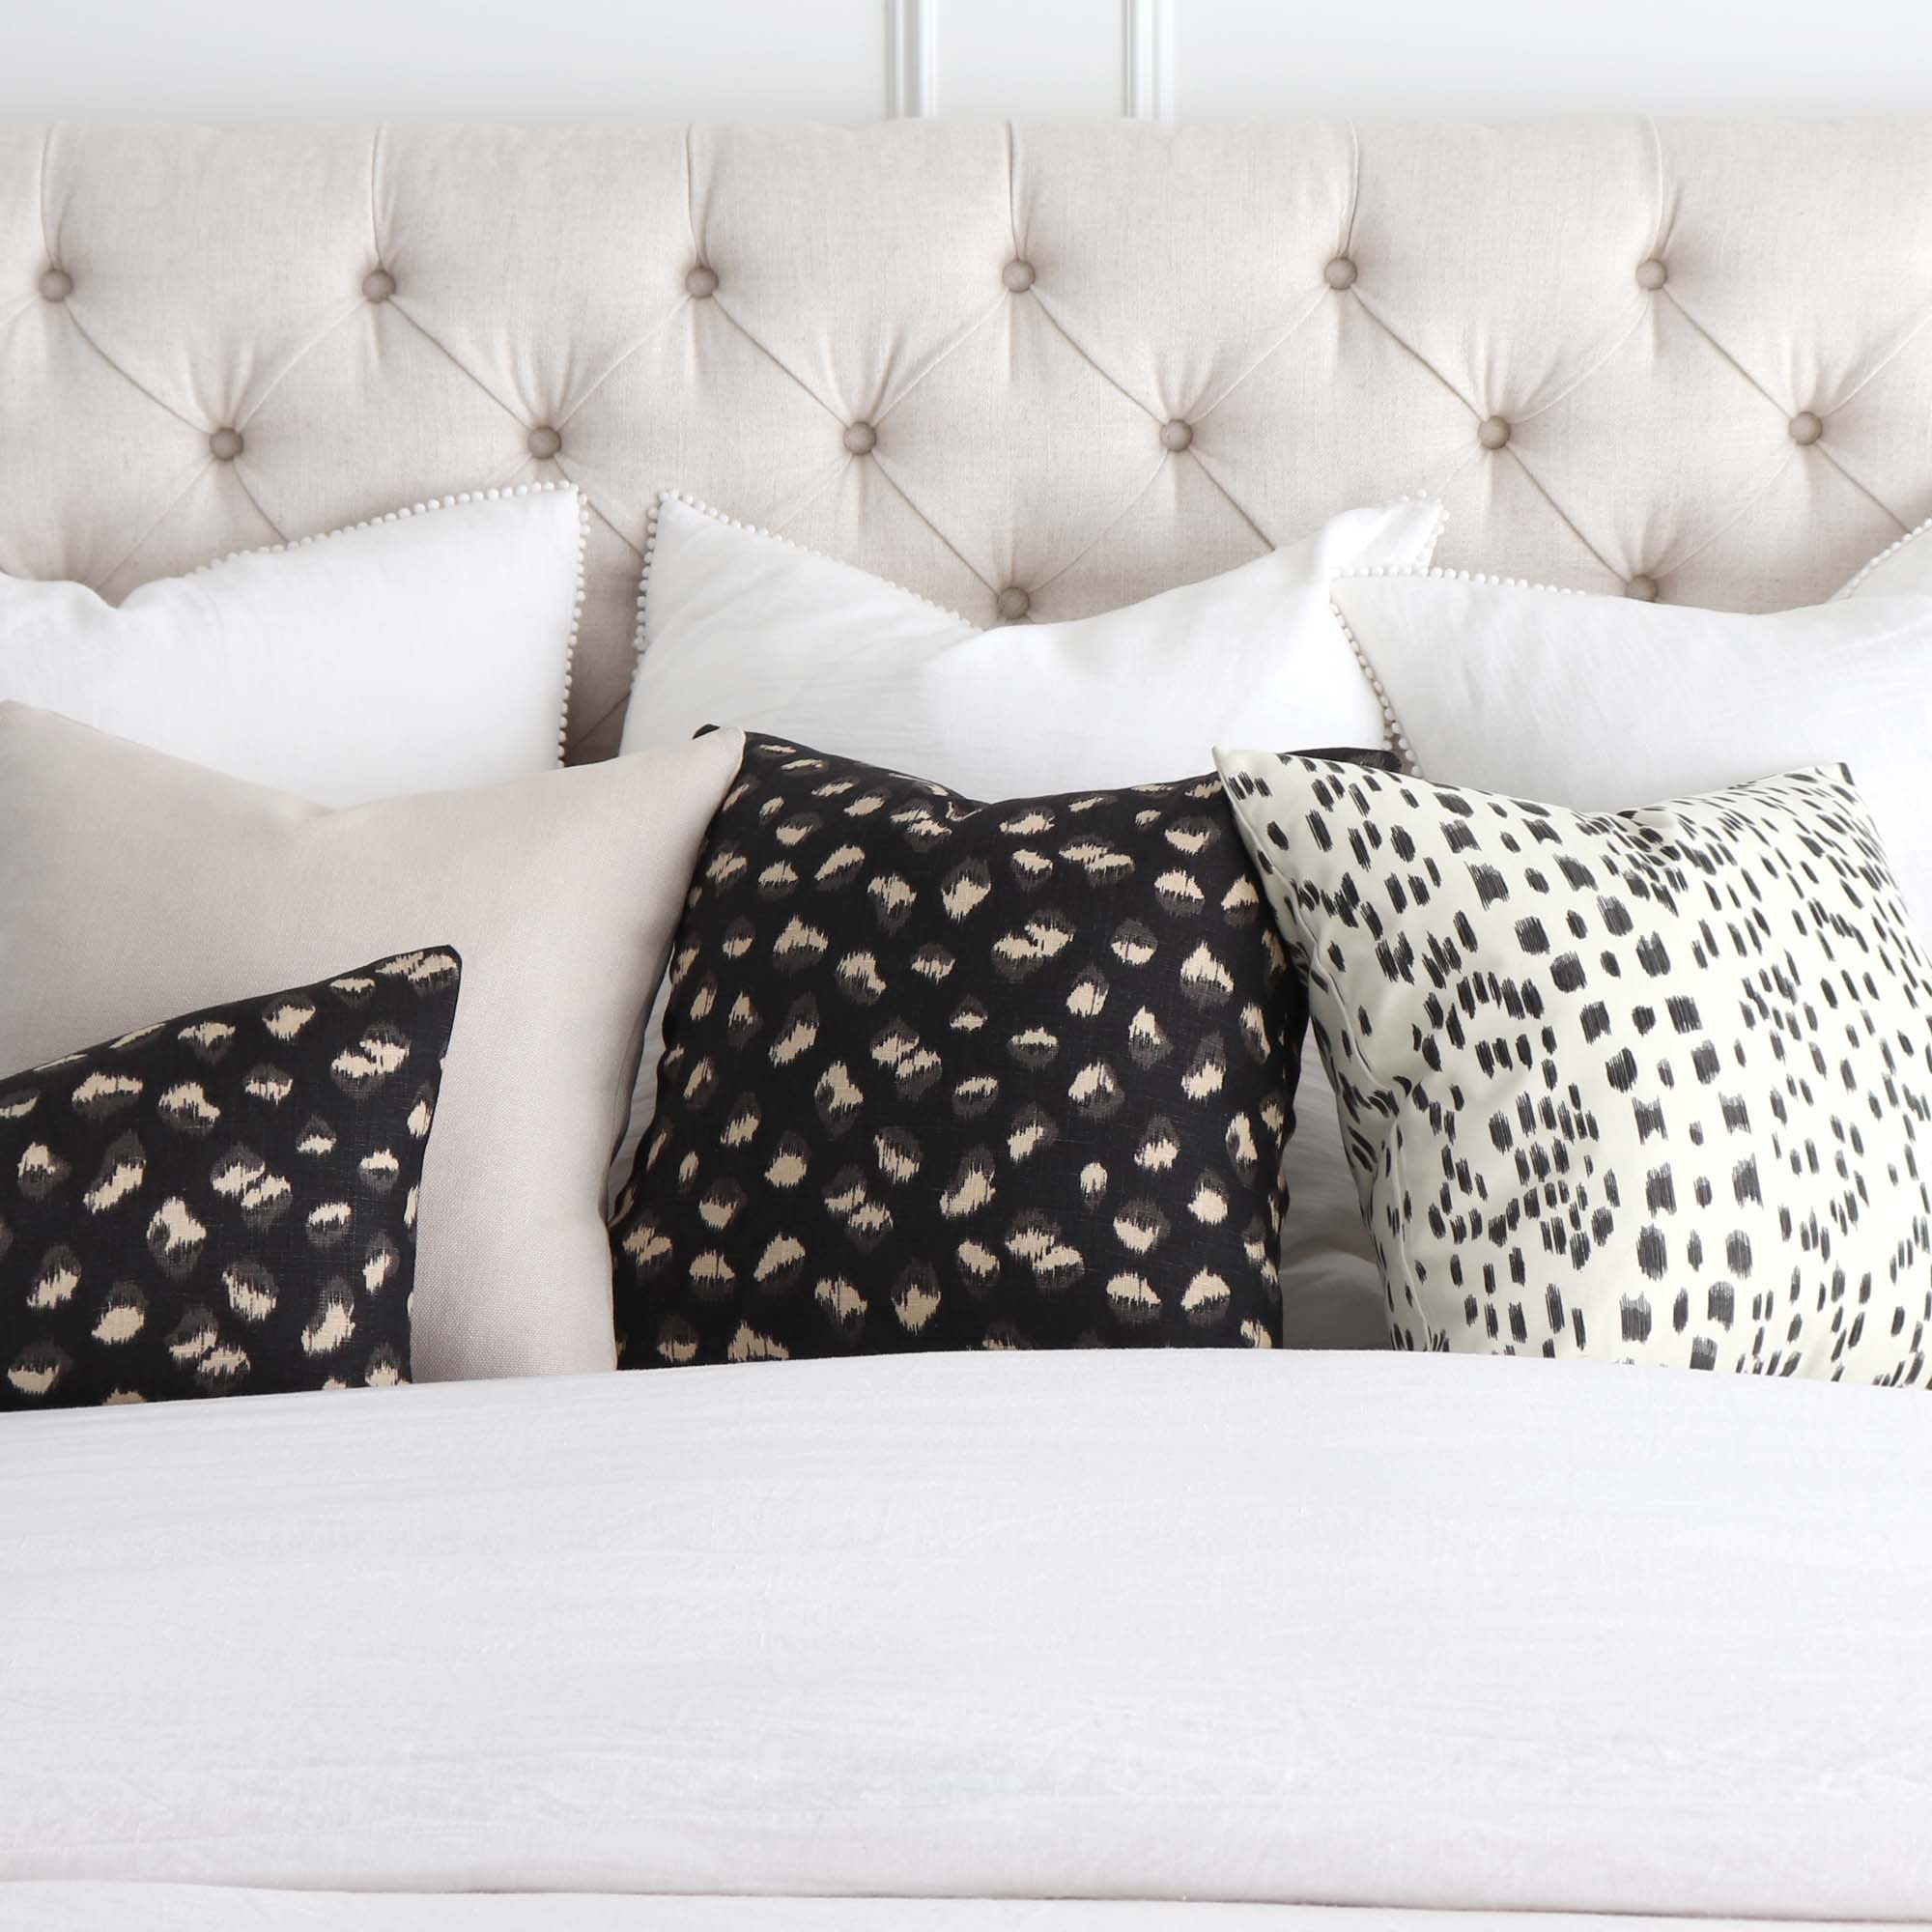 Small Polka Dot Pillow (black and white) Pillows